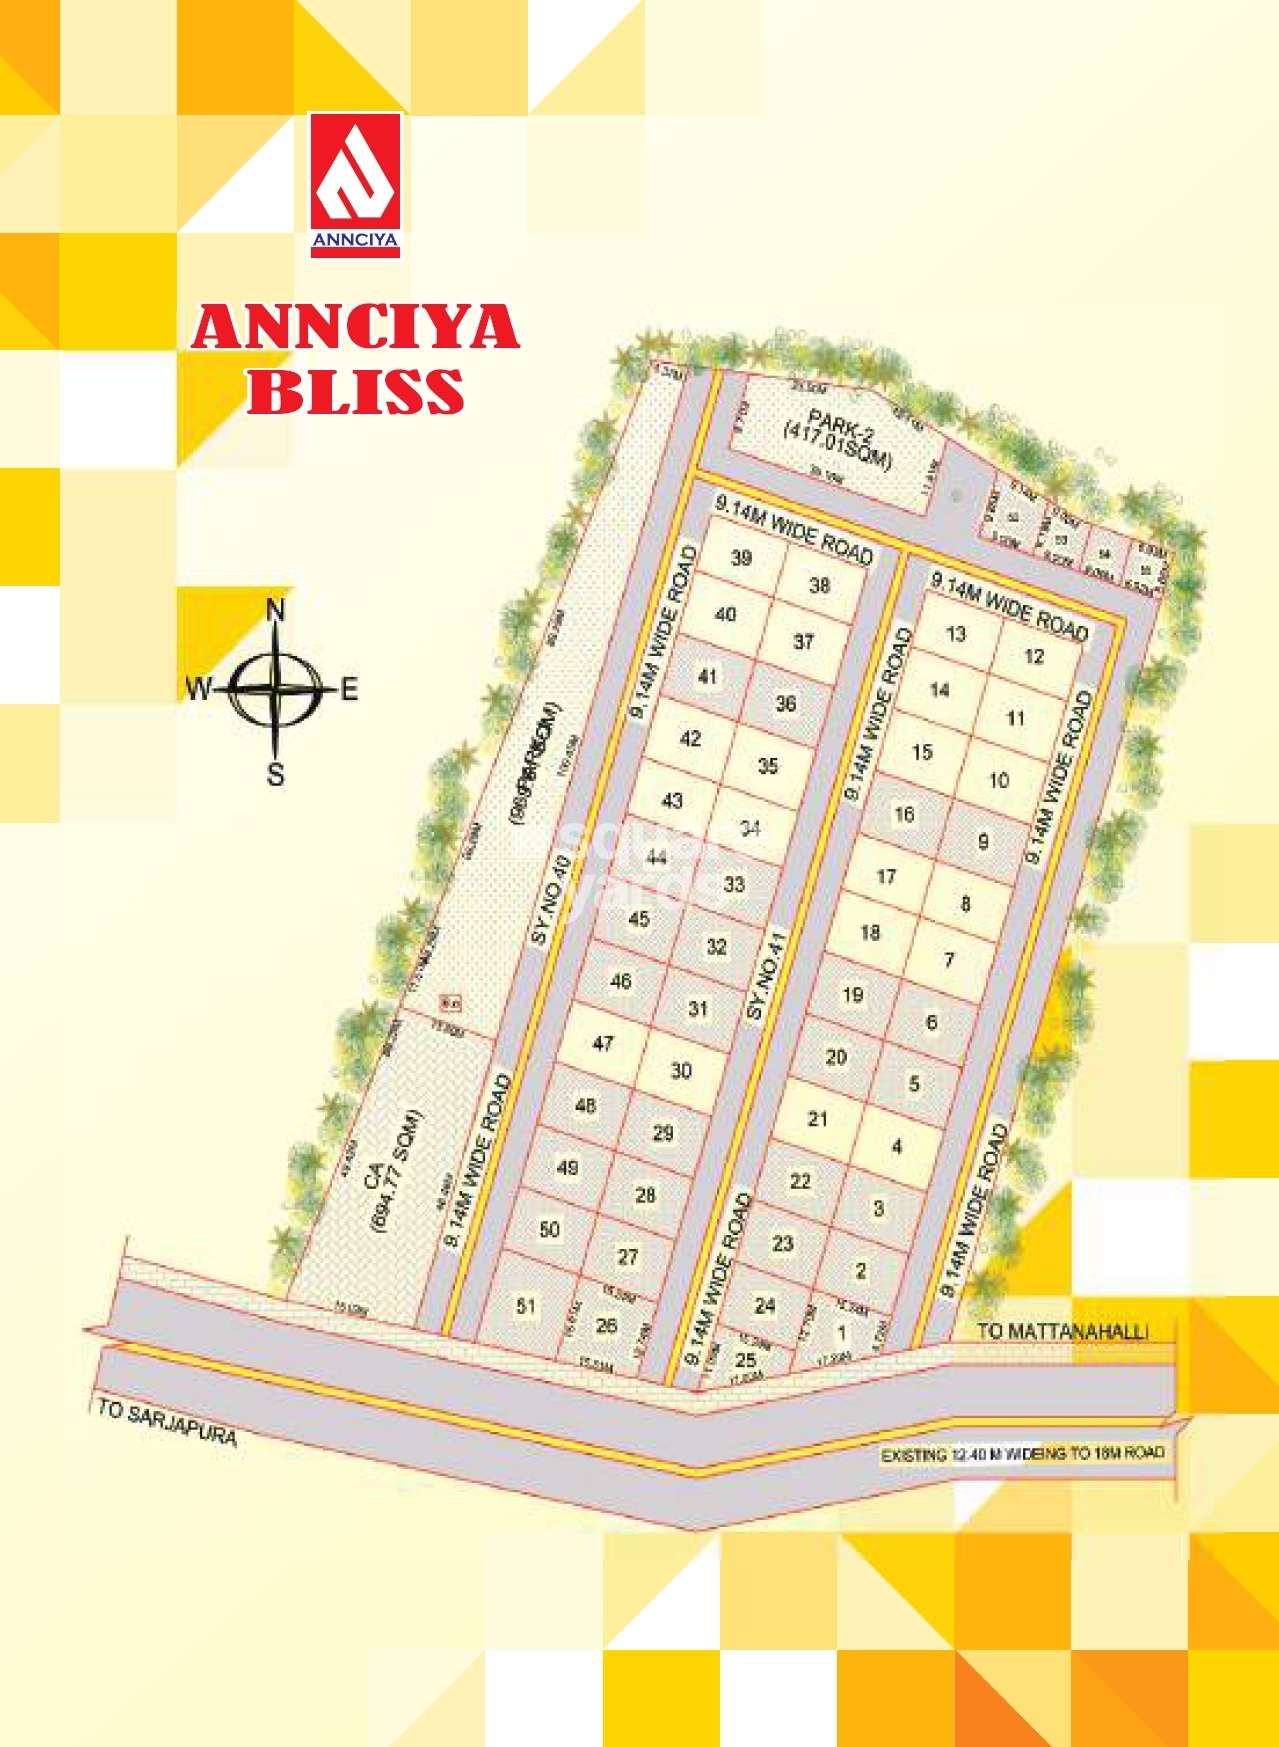 annciya bliss project master plan image1 1943